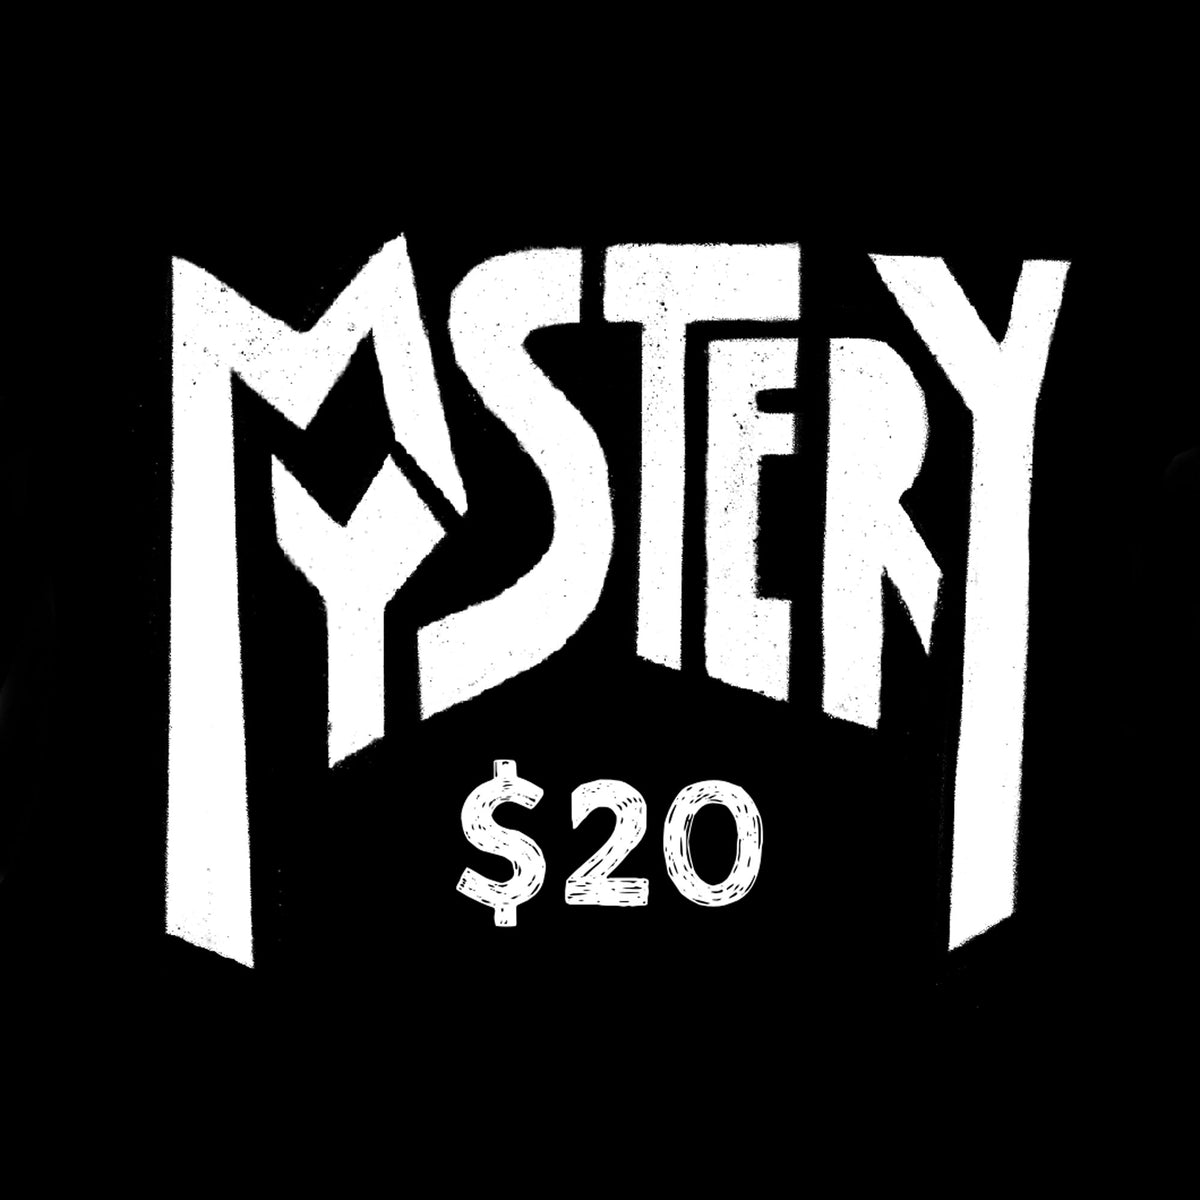 Tikam (Mystery) $20